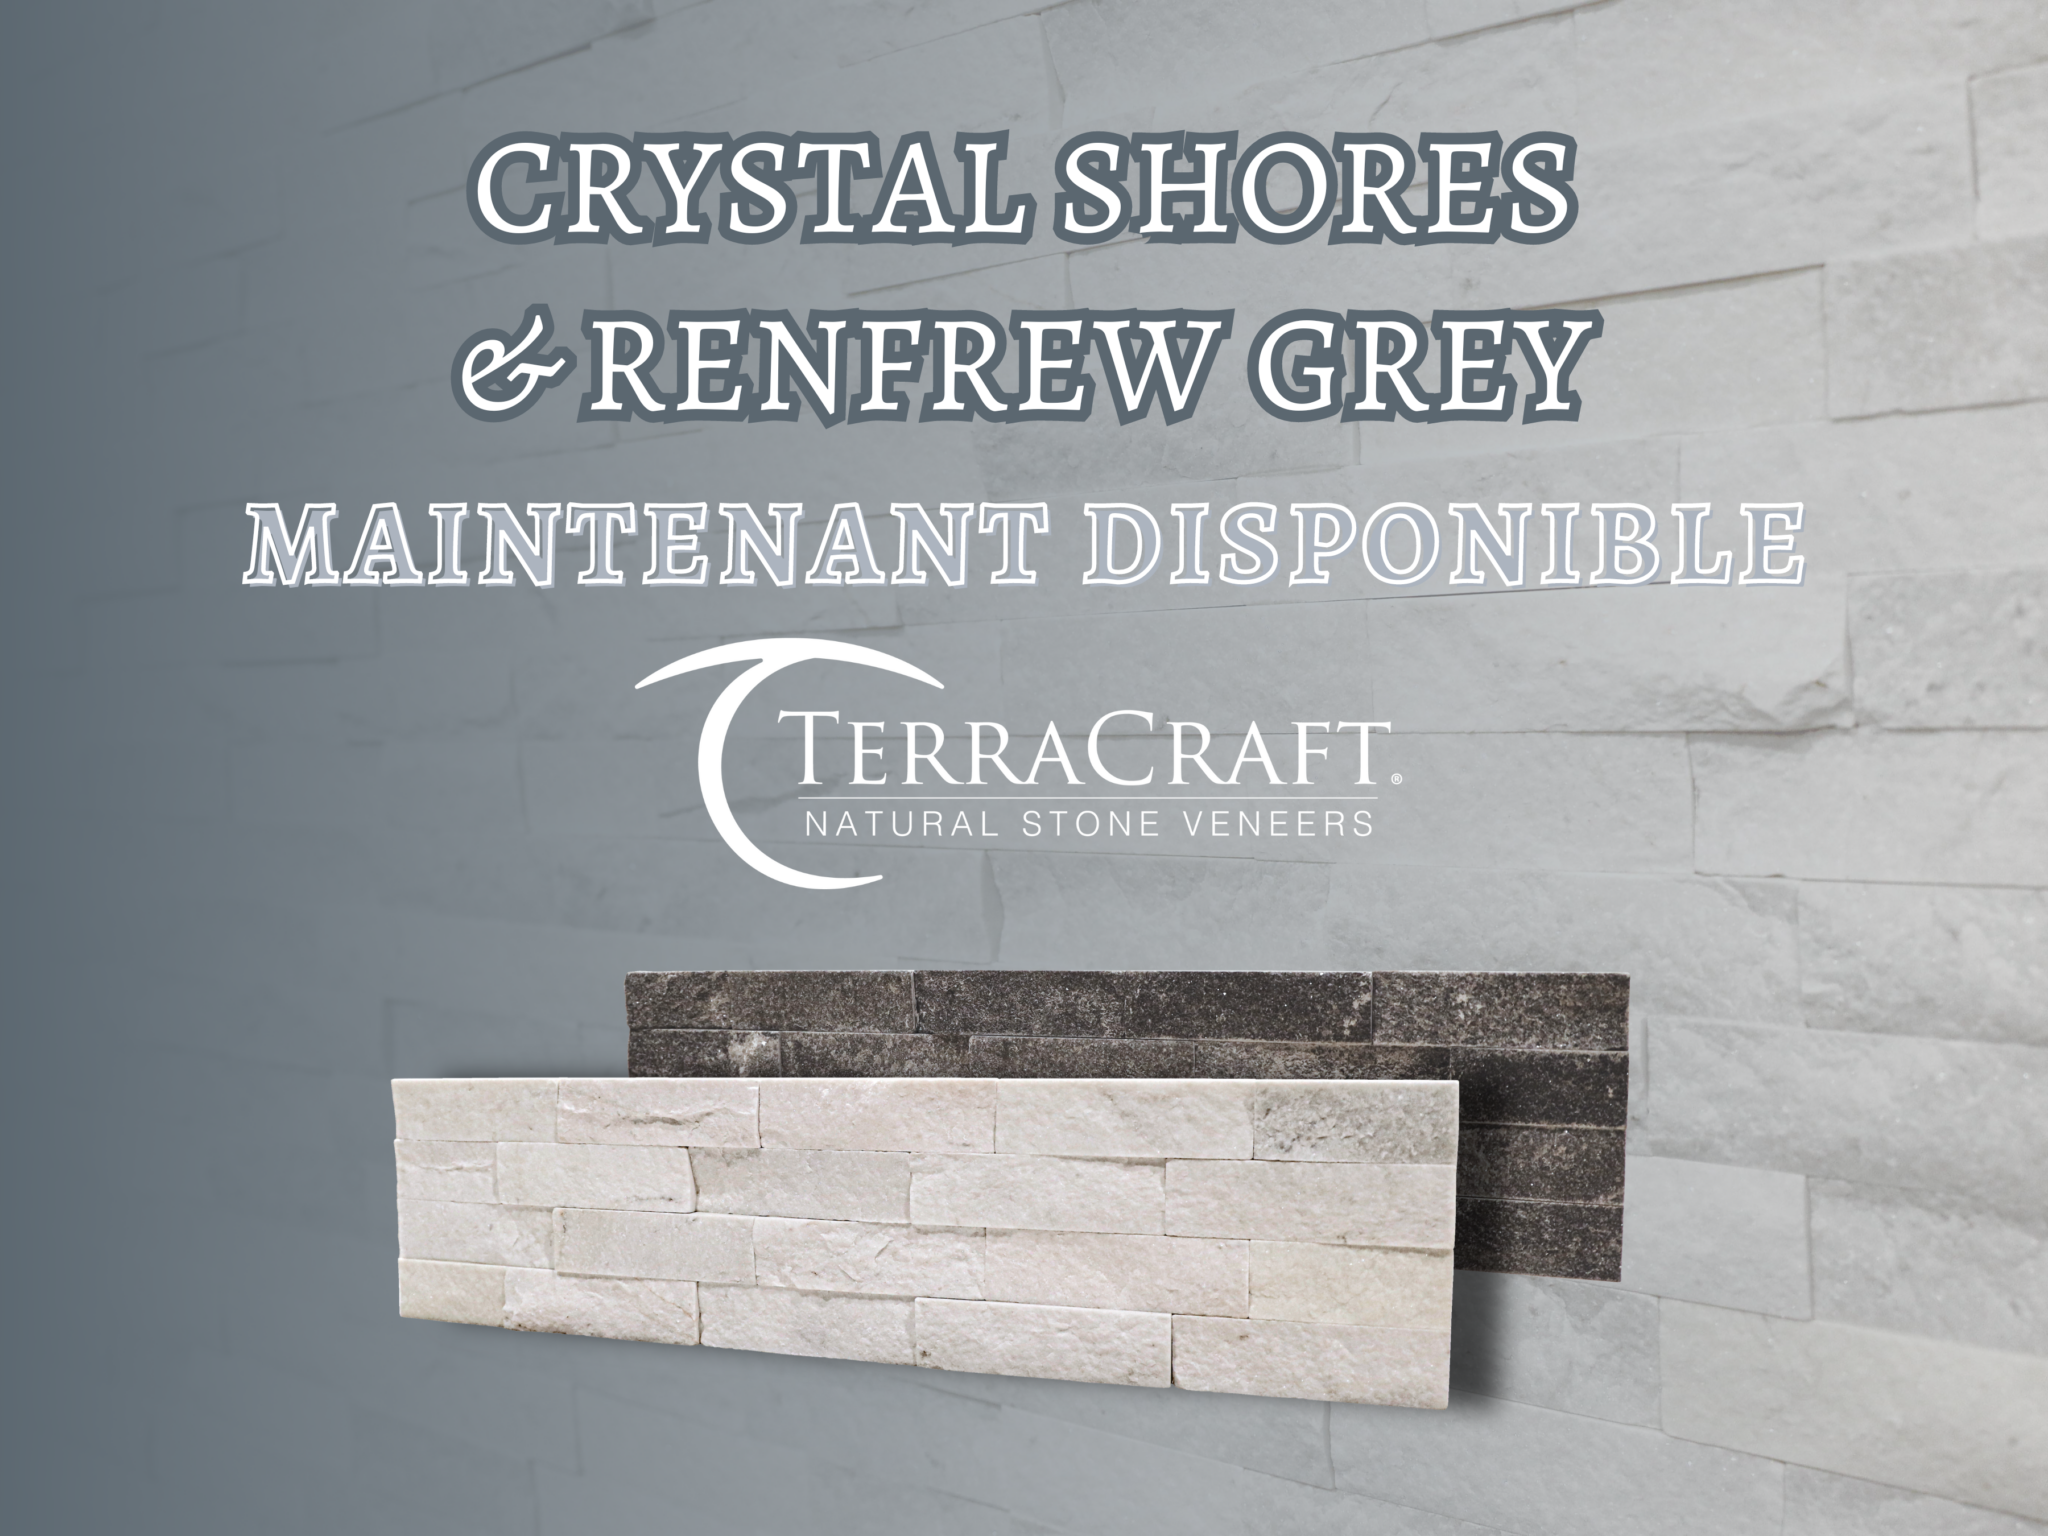 Introducing Crystal Shores & Renfrew Grey